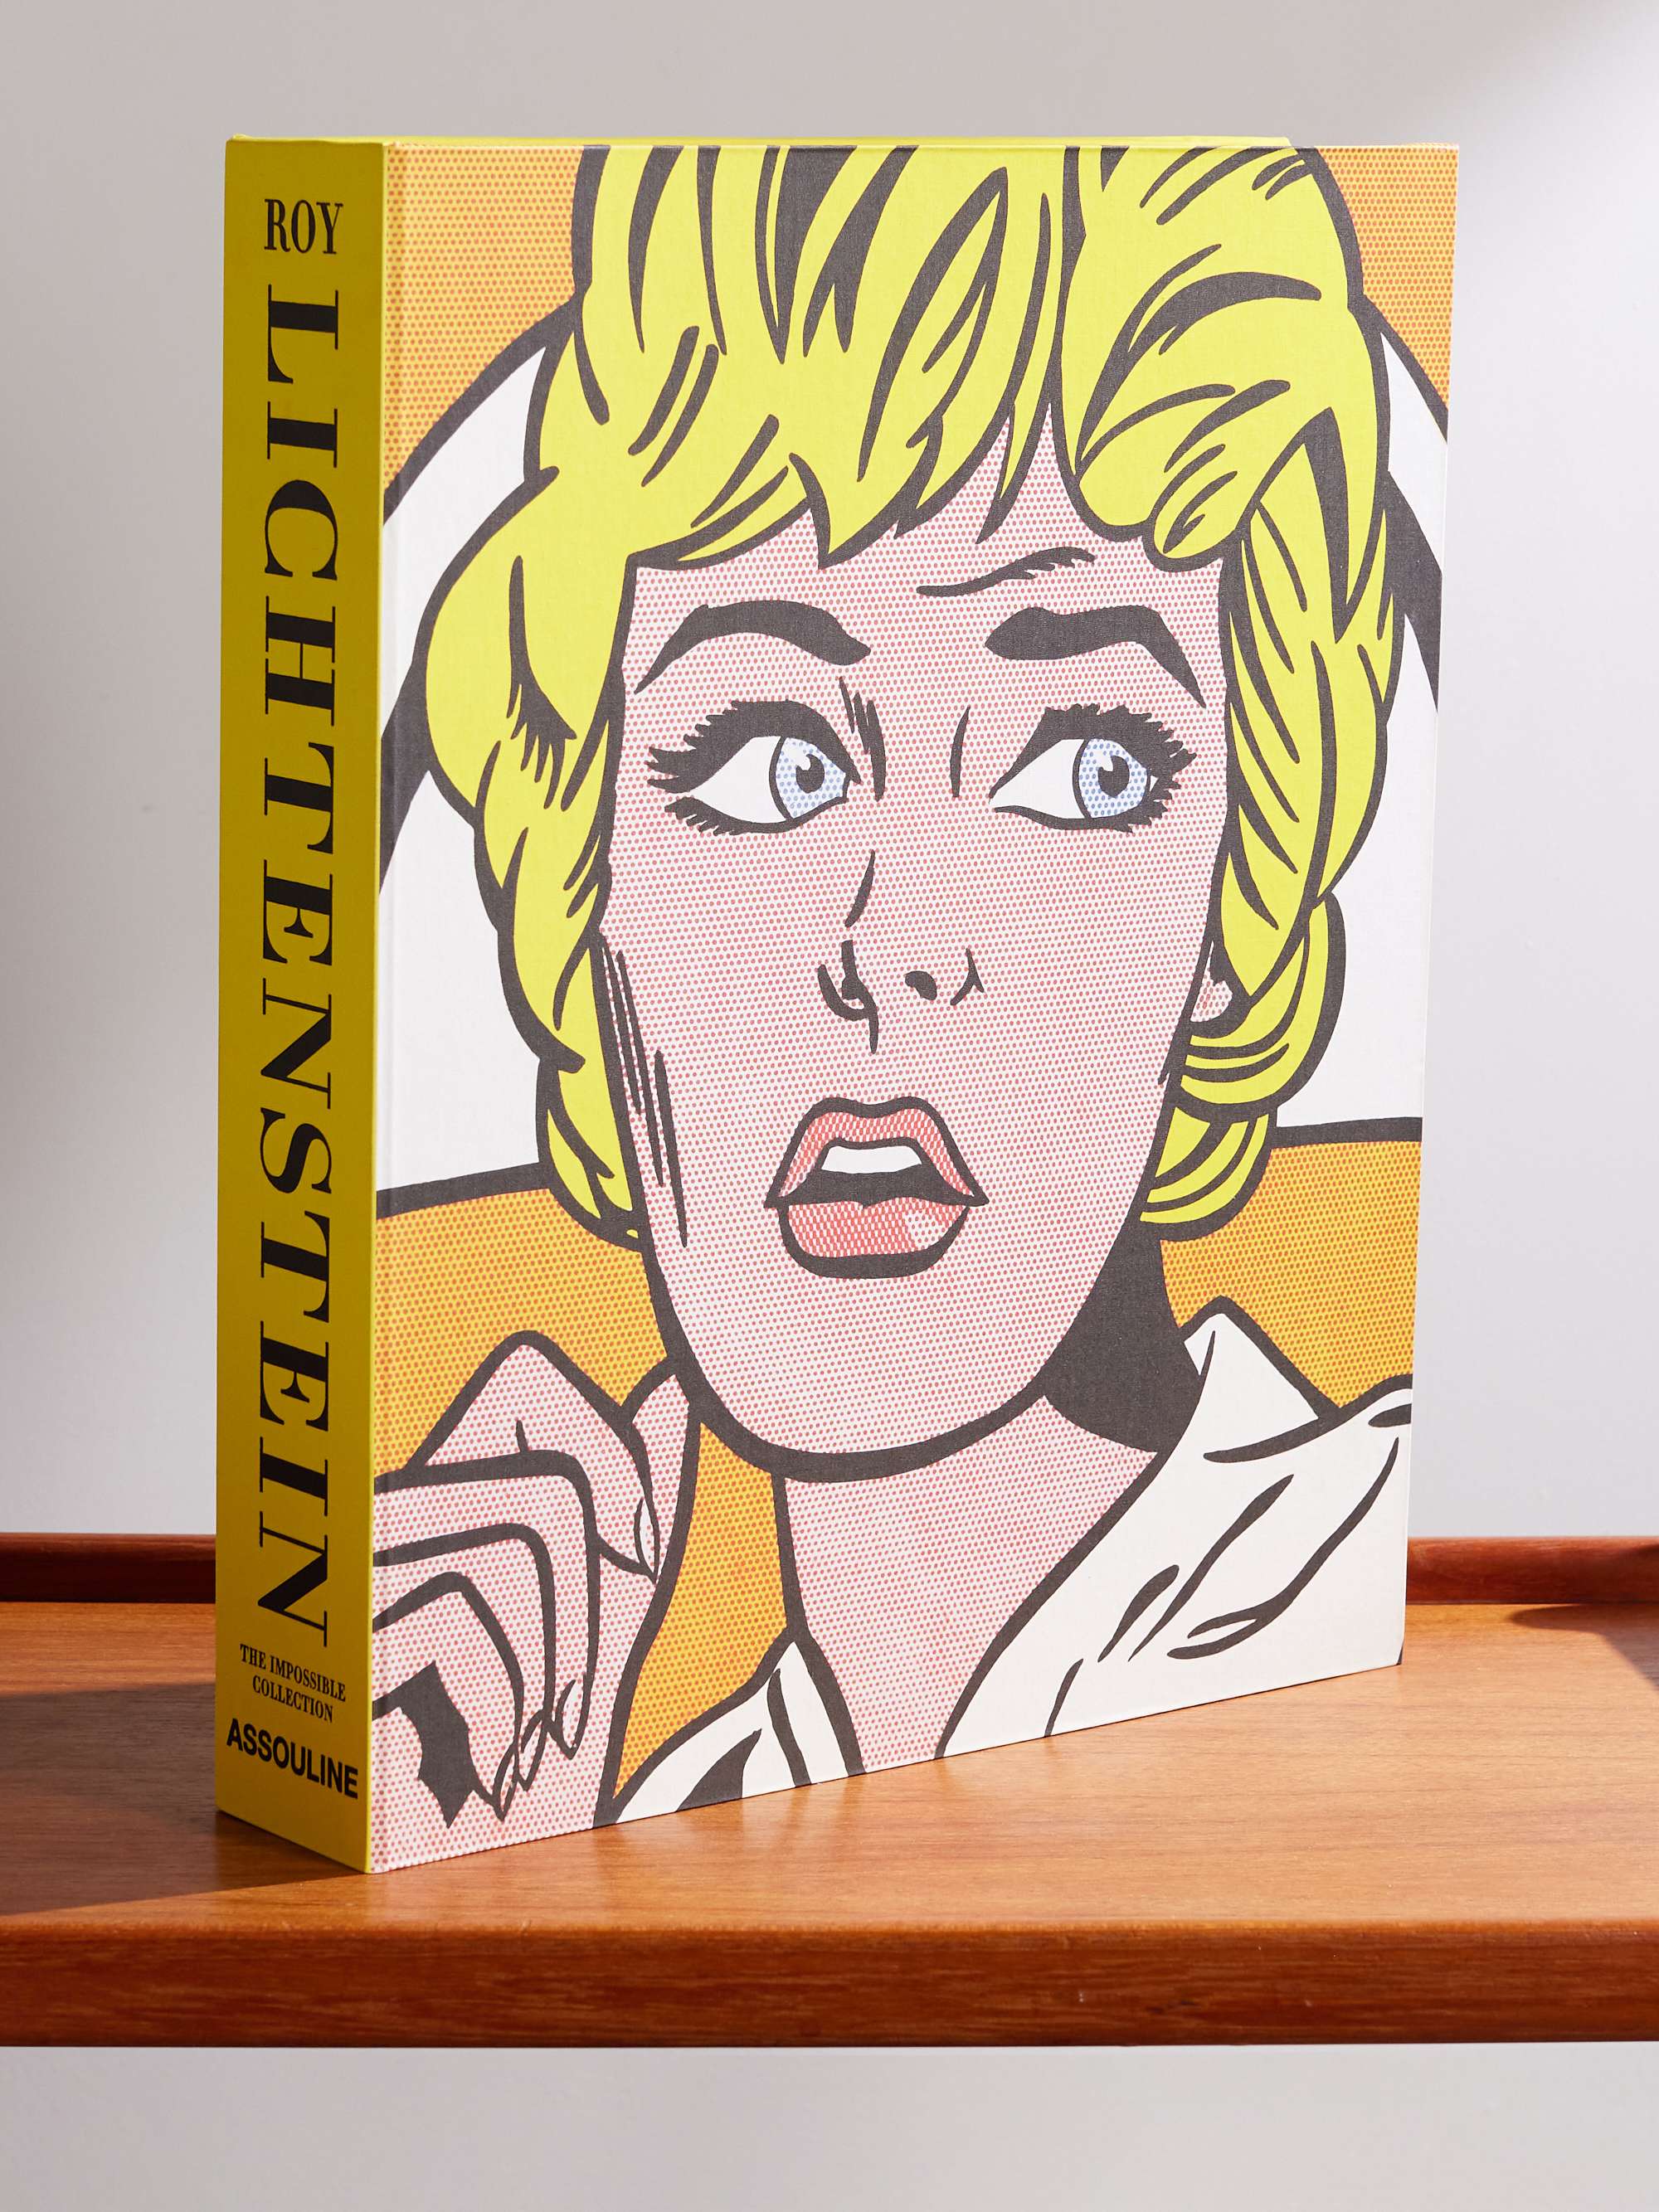 Louis Vuitton: Virgil Abloh Book Classic Cartoon Cover Assouline - New Sold  Out